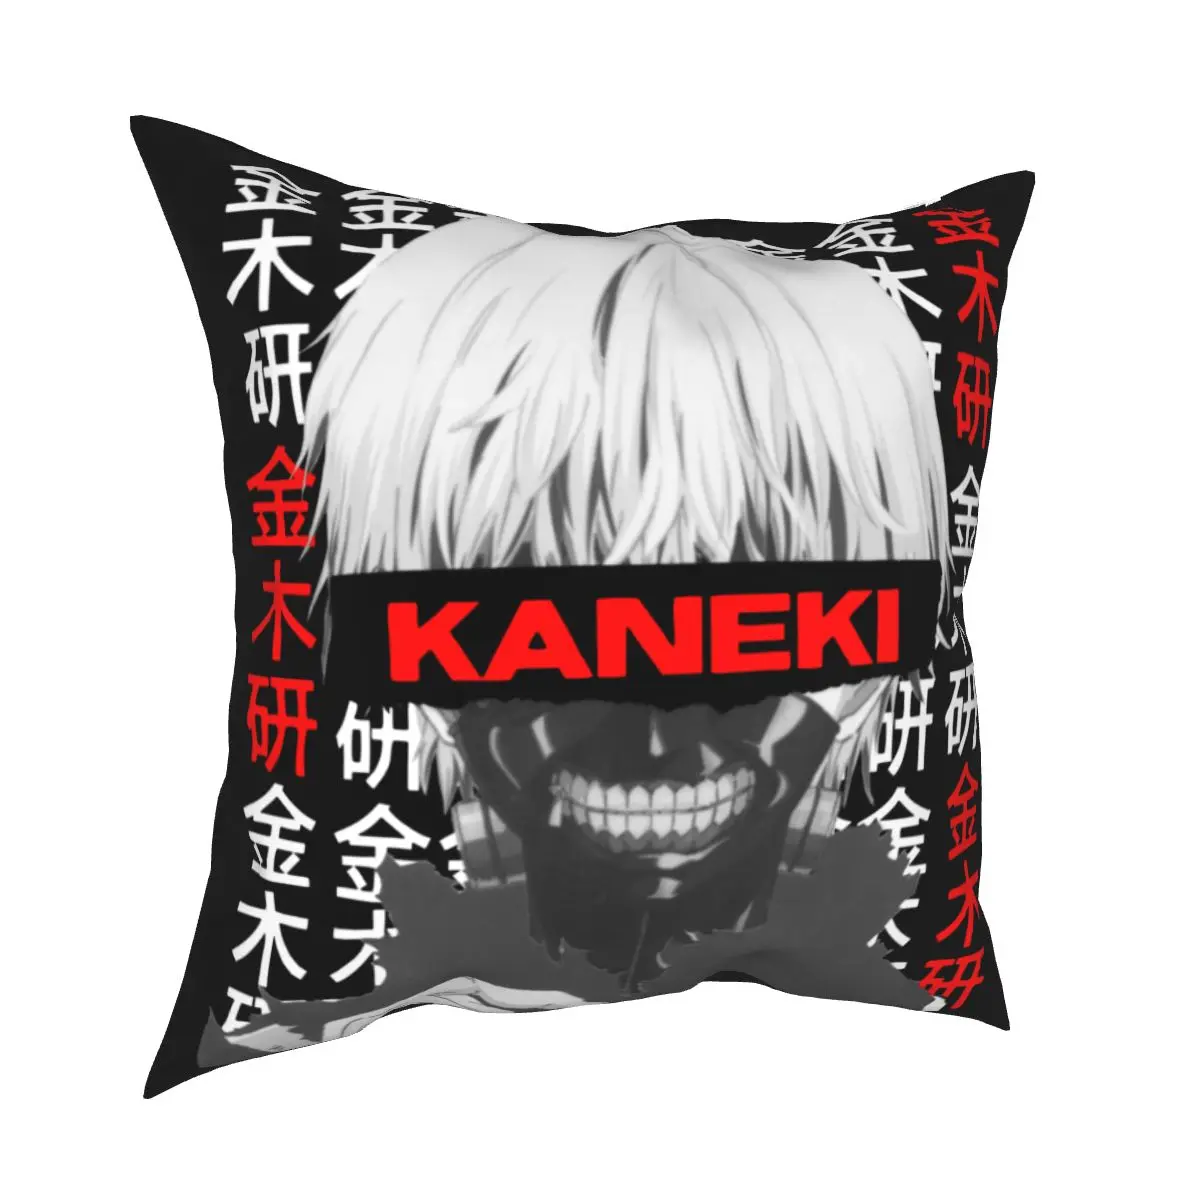 

Tokyo Ghoul Kaneki Square Pillow Case Ken Japan Anime Manga Black Cushion Covers Decor Pillowcase for Seat 45x45cm